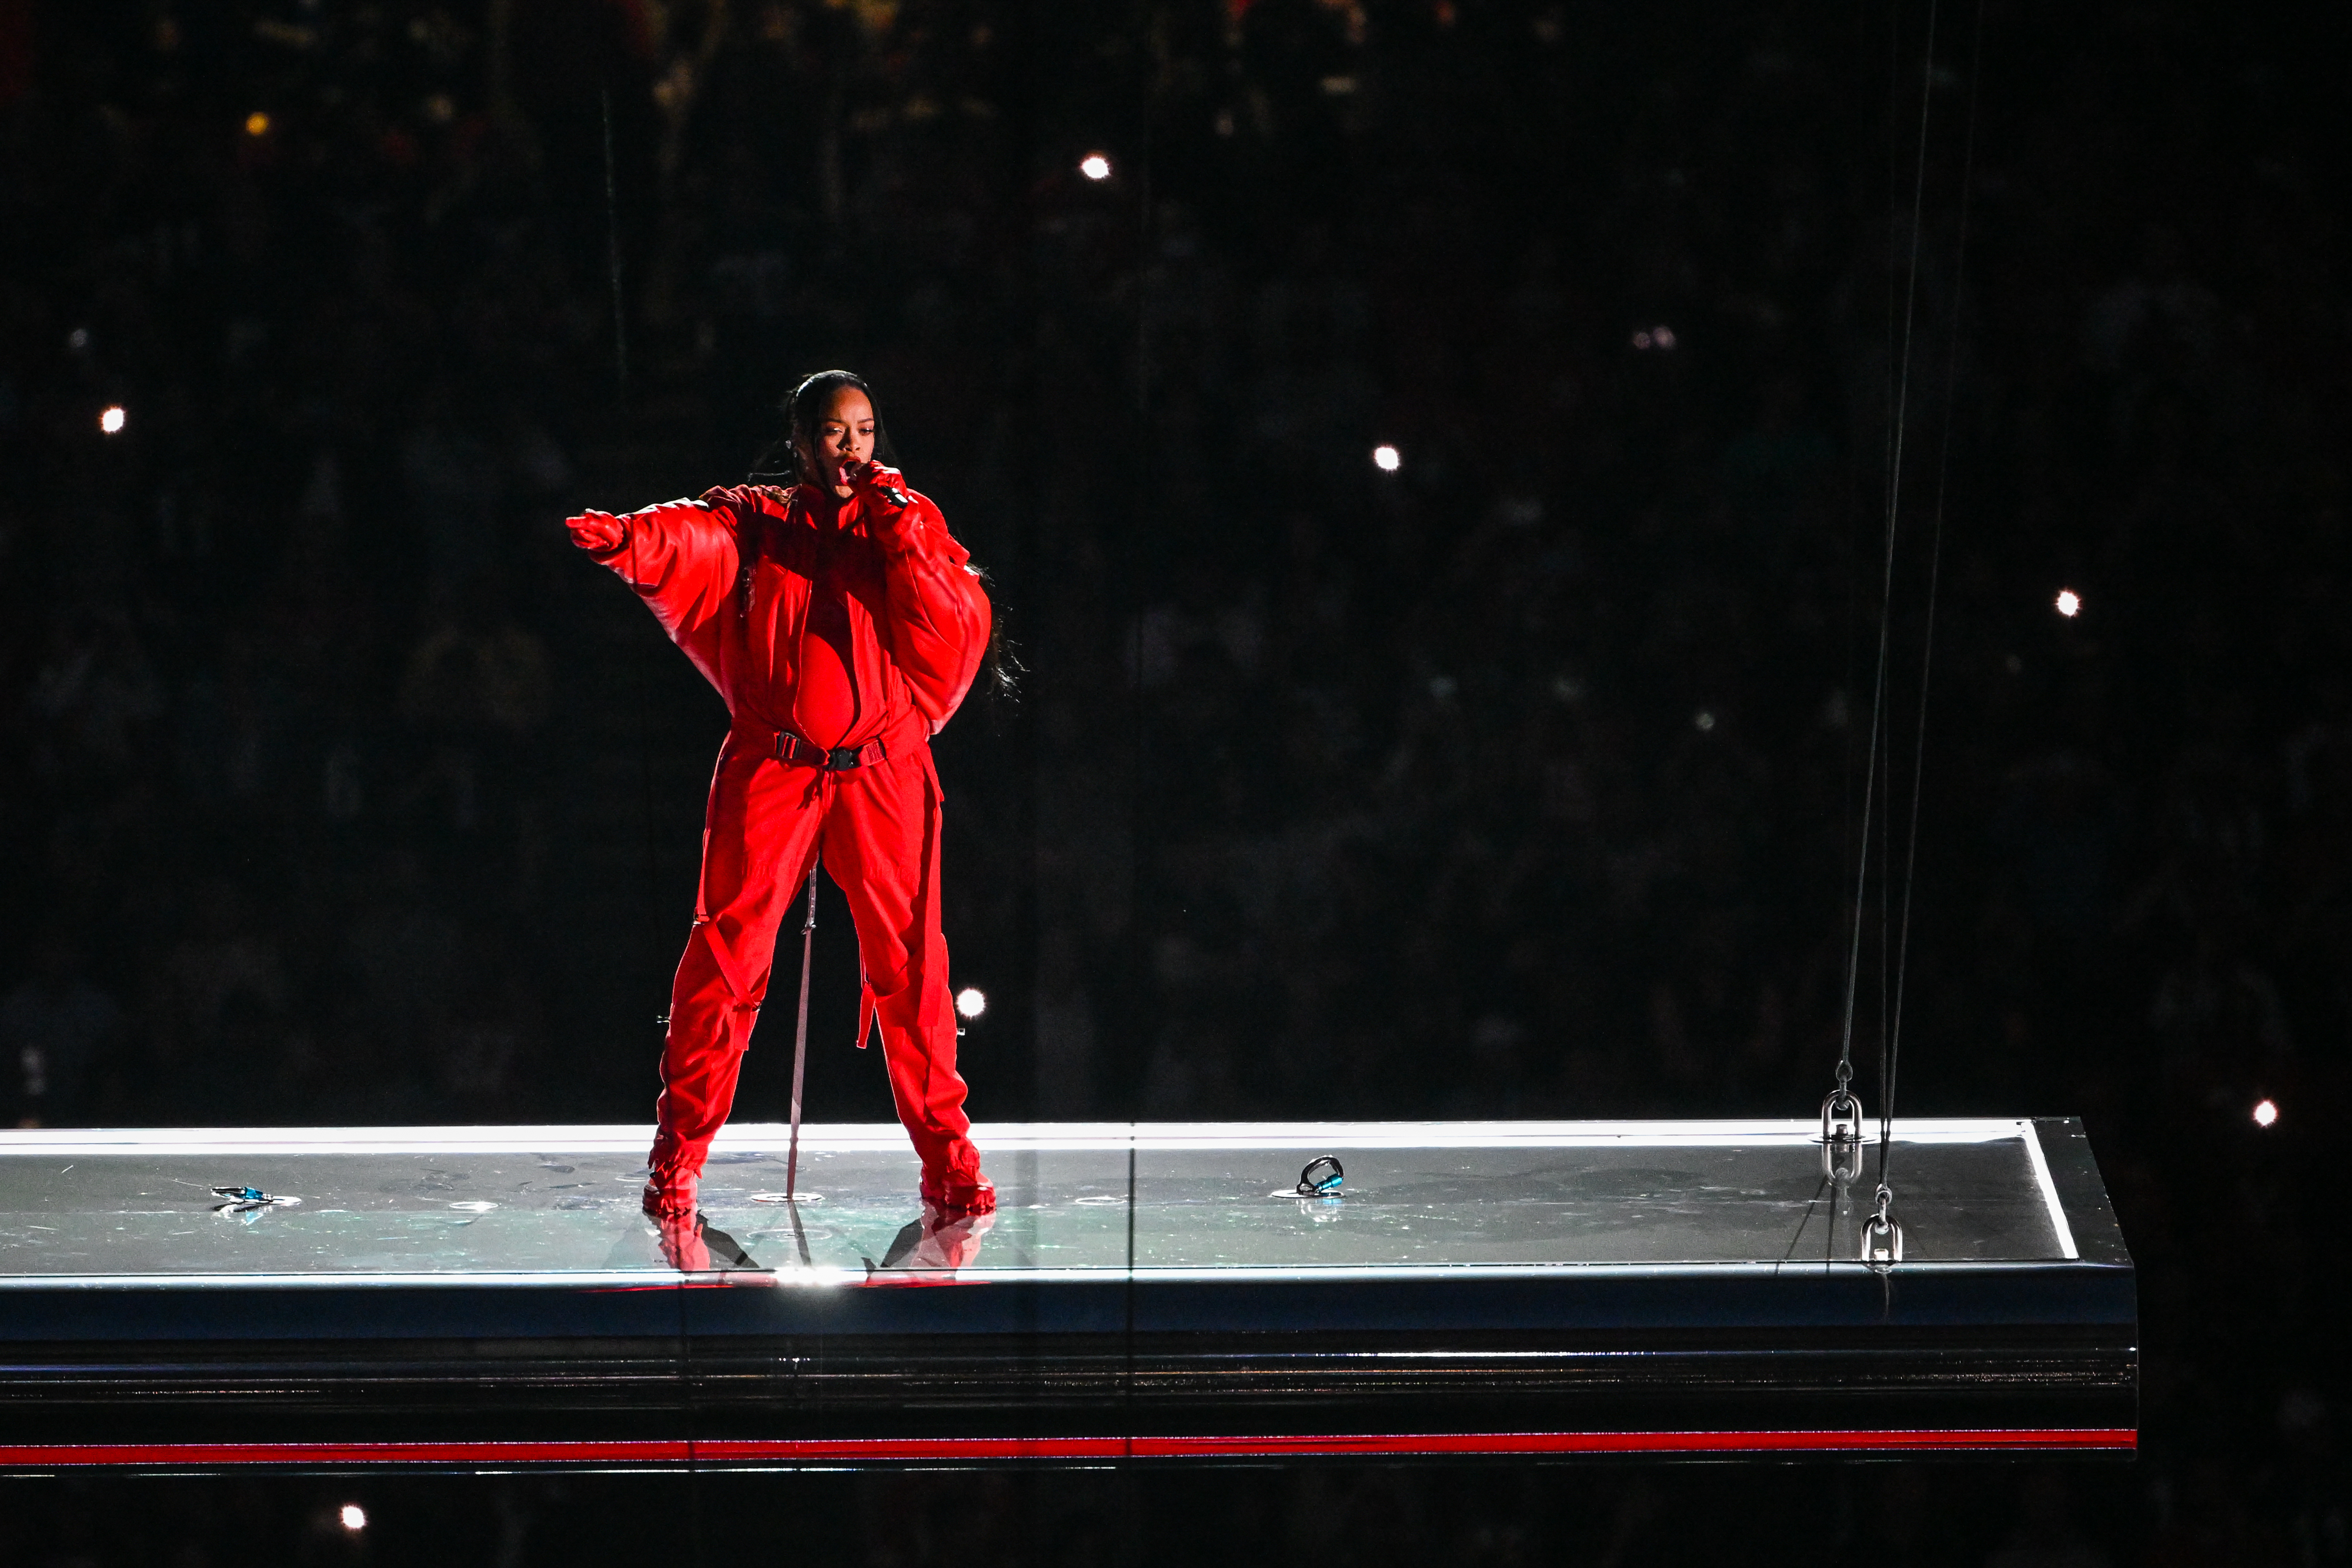 A wee bit of Magherafelt at the Super Bowl' as Rihanna wears NI